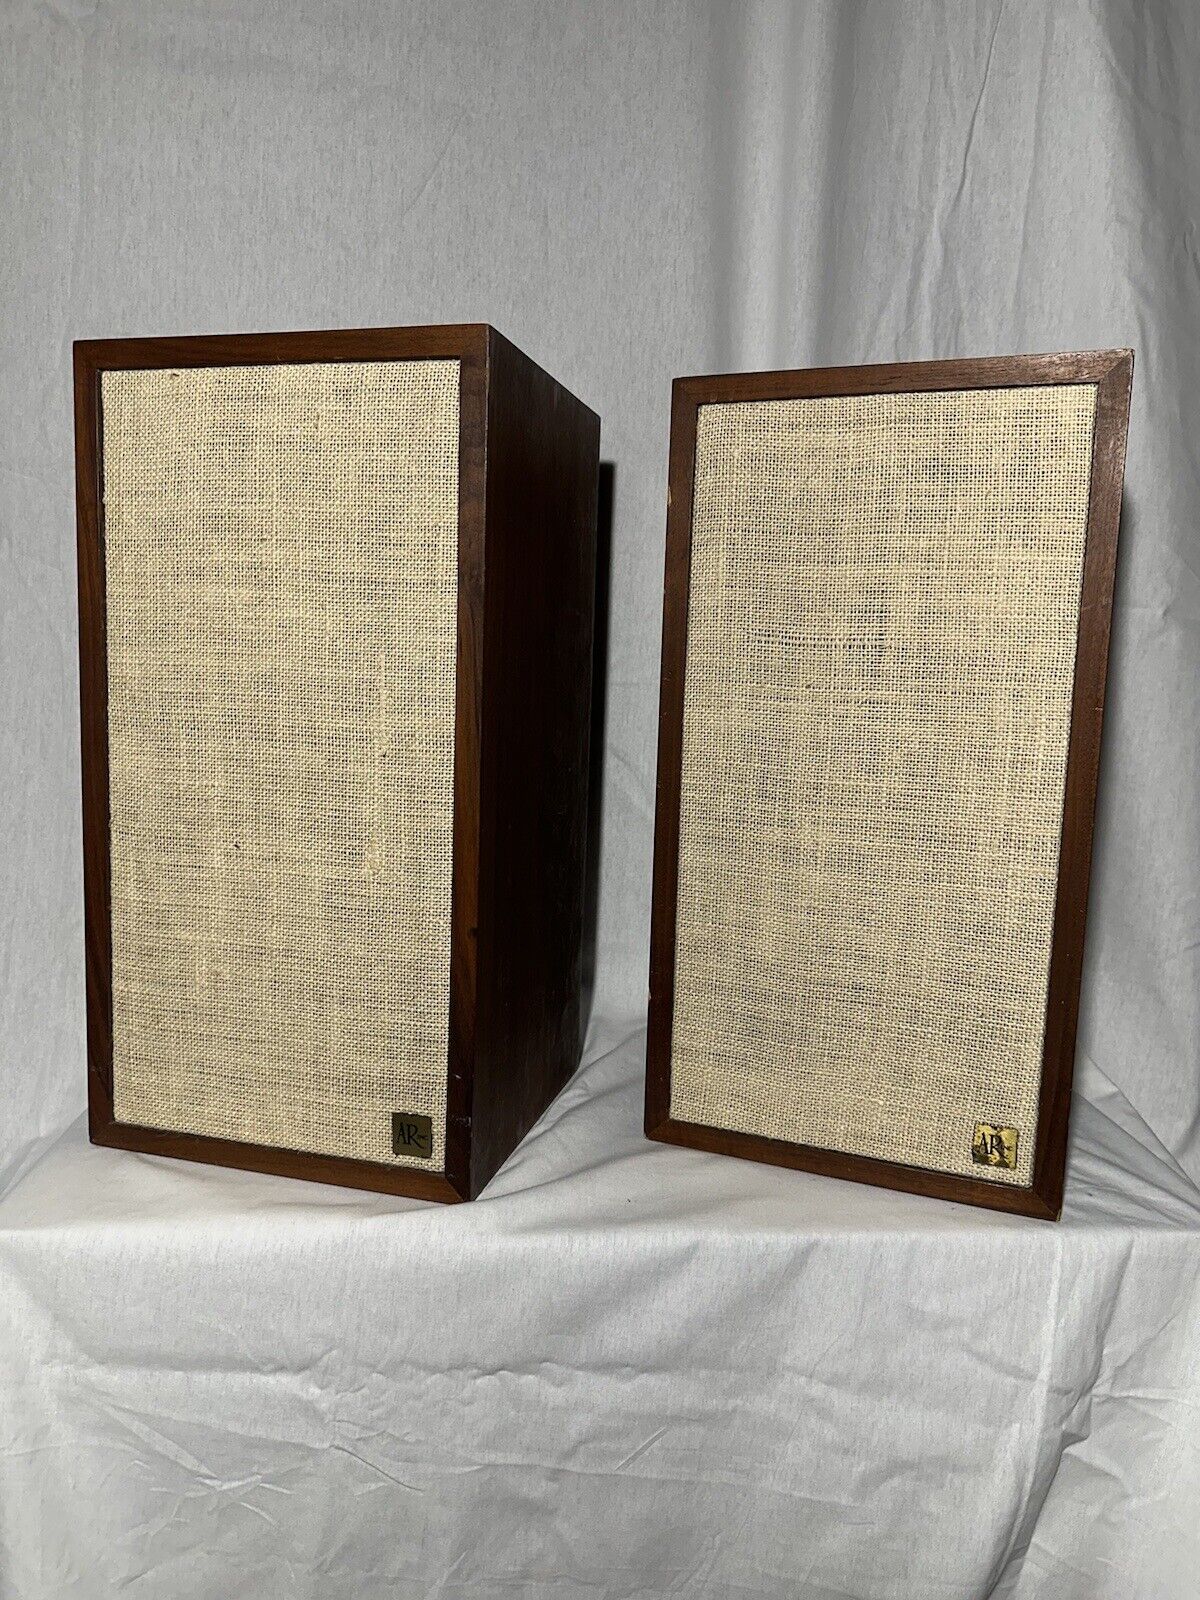 Vintage Pair Acoustic Research AR-4x  Bookshelf Speakers - Good Condition